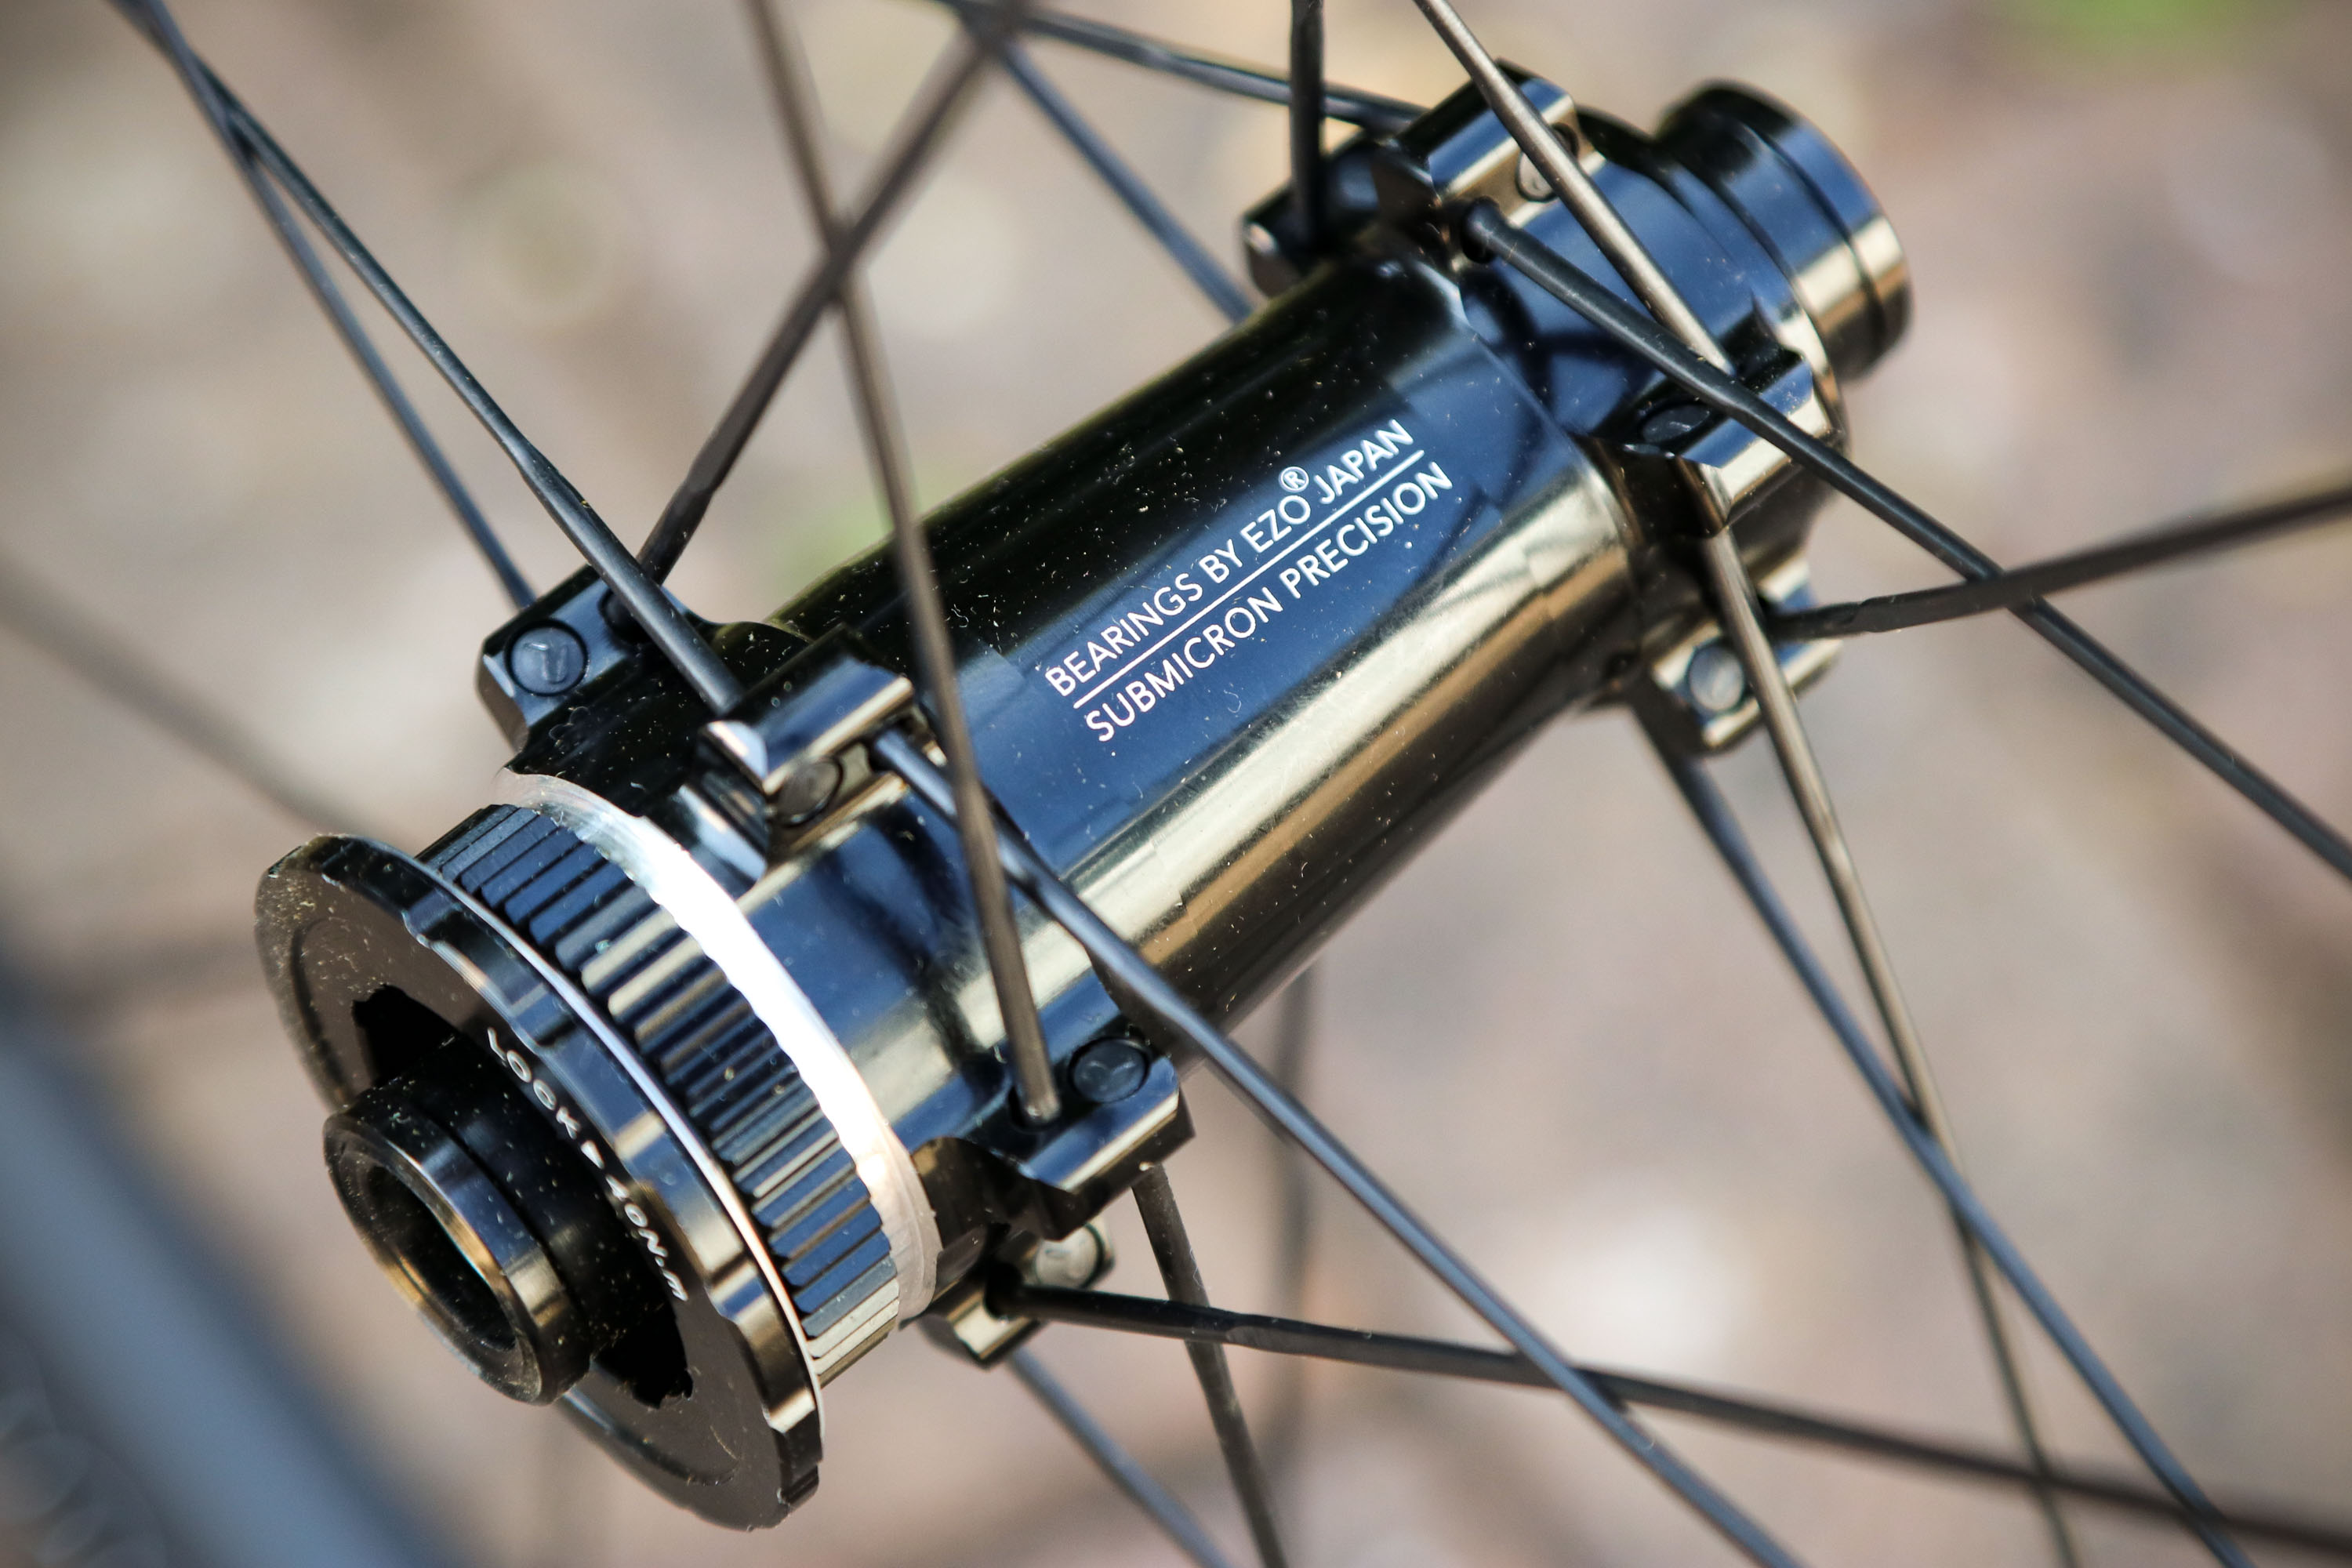 hunt 50 carbon aero disc wheelset